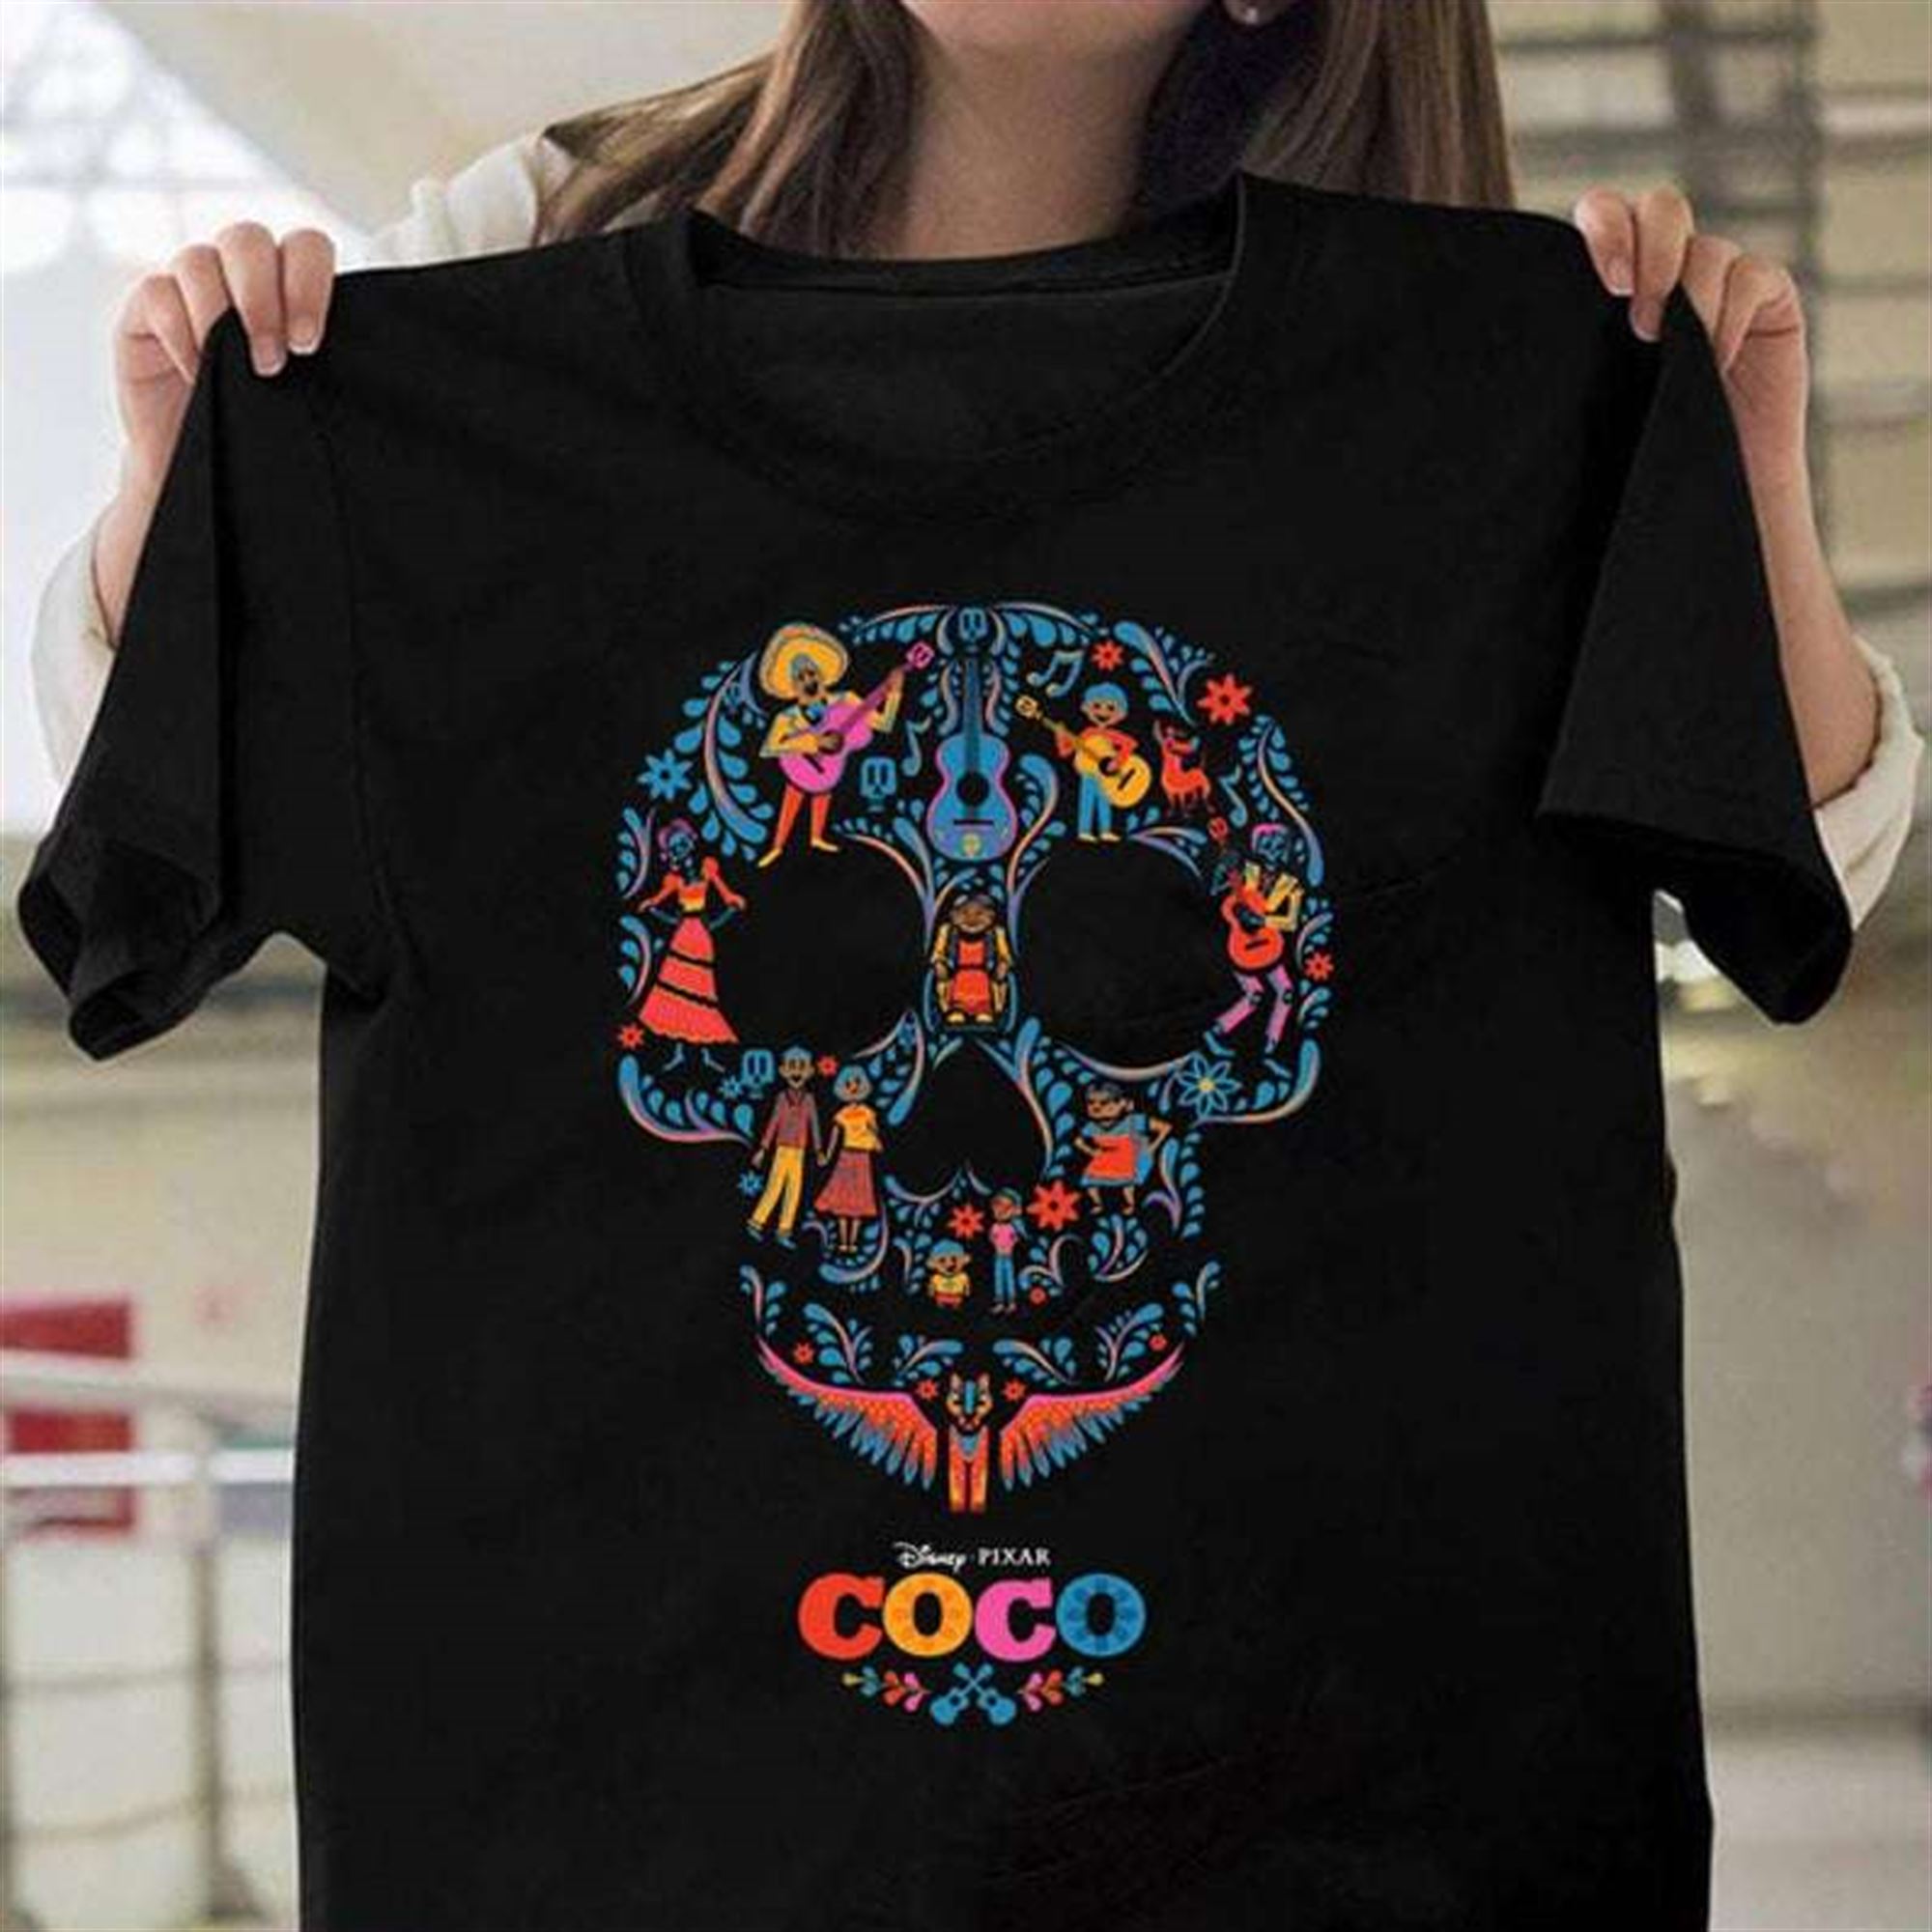 Disney Pixar Coco Colorful T Shirt Plus Size Up To 5x